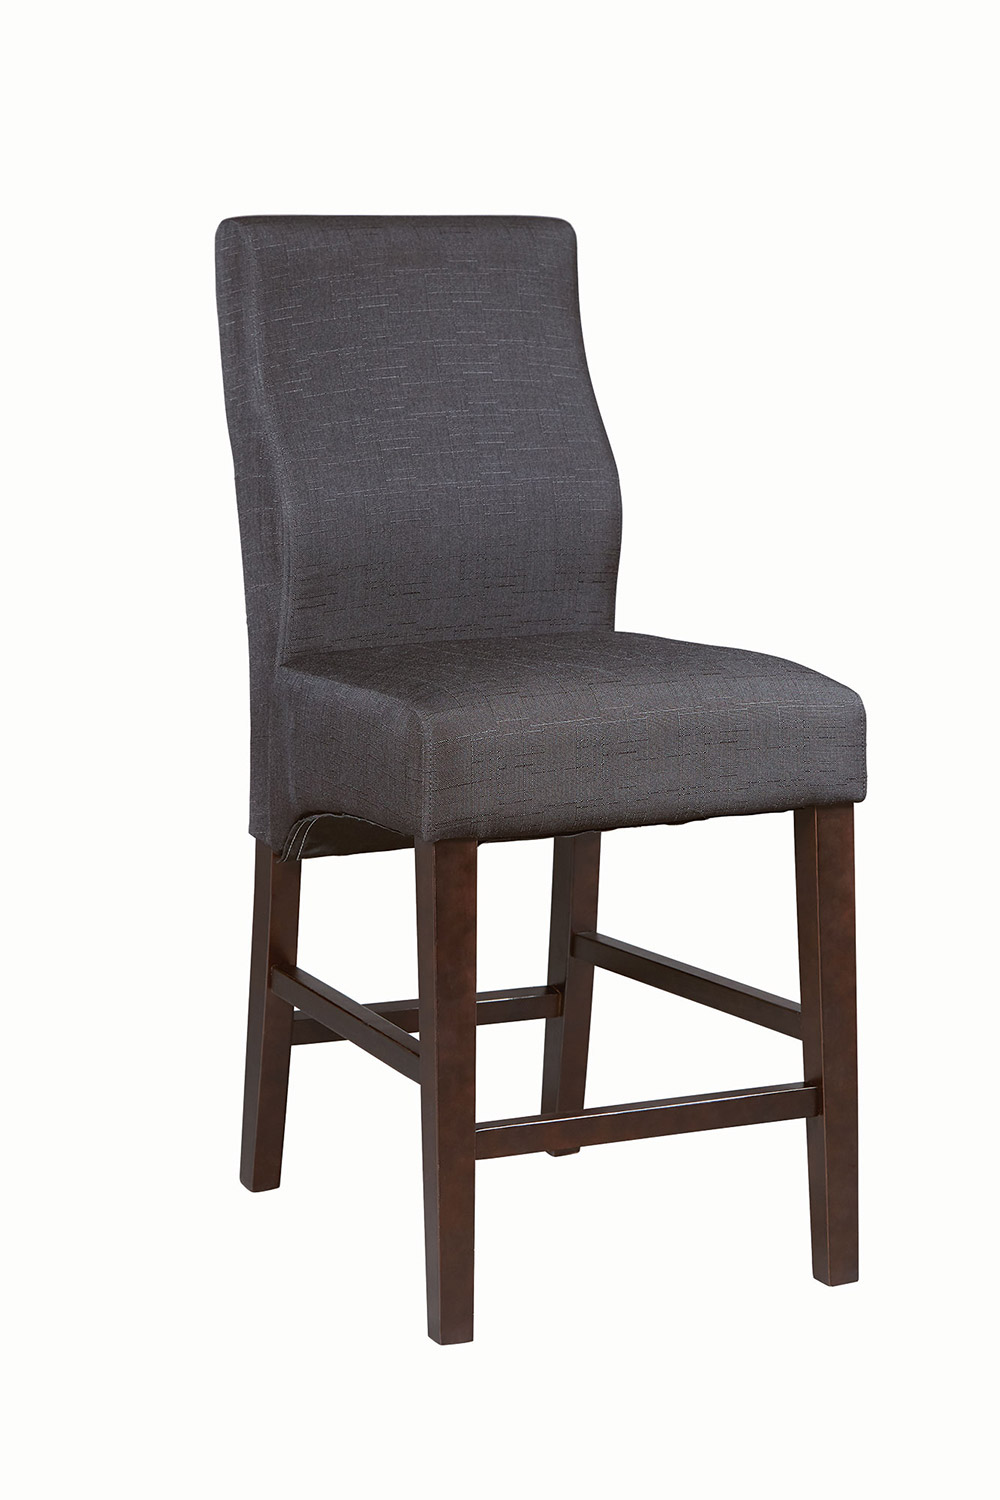 Coaster Dorsett Counter Height Chair - Black